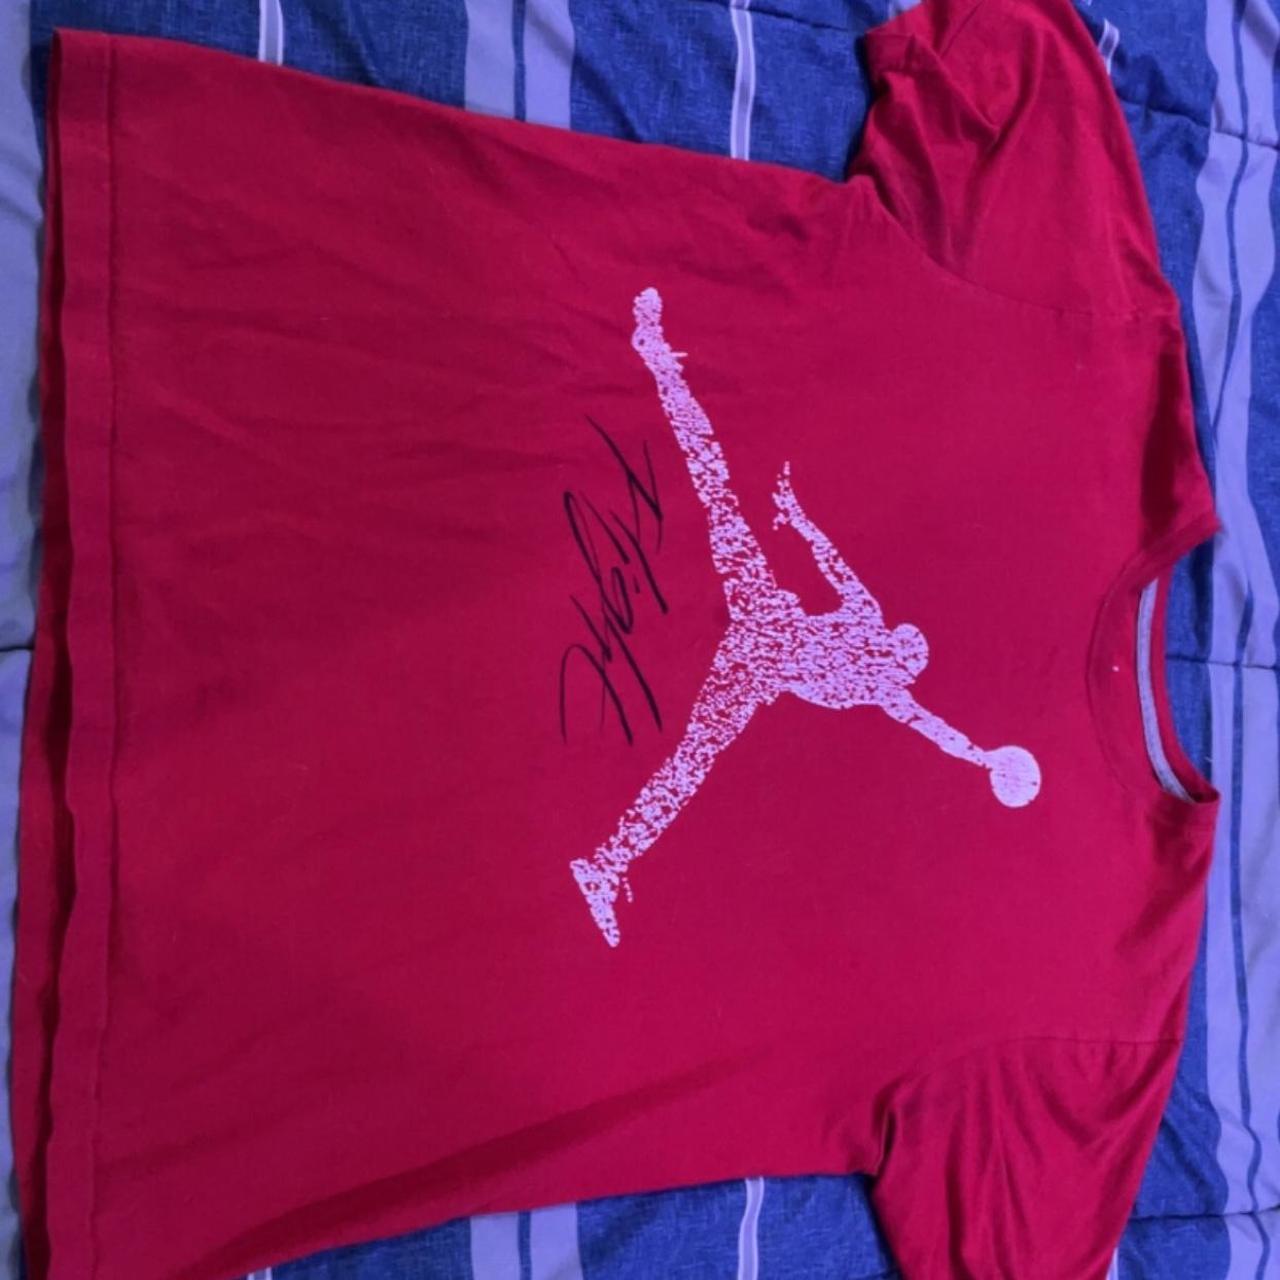 Vintage Jordan T-Shirt #vintage #jordan #Jumpman #red - Depop